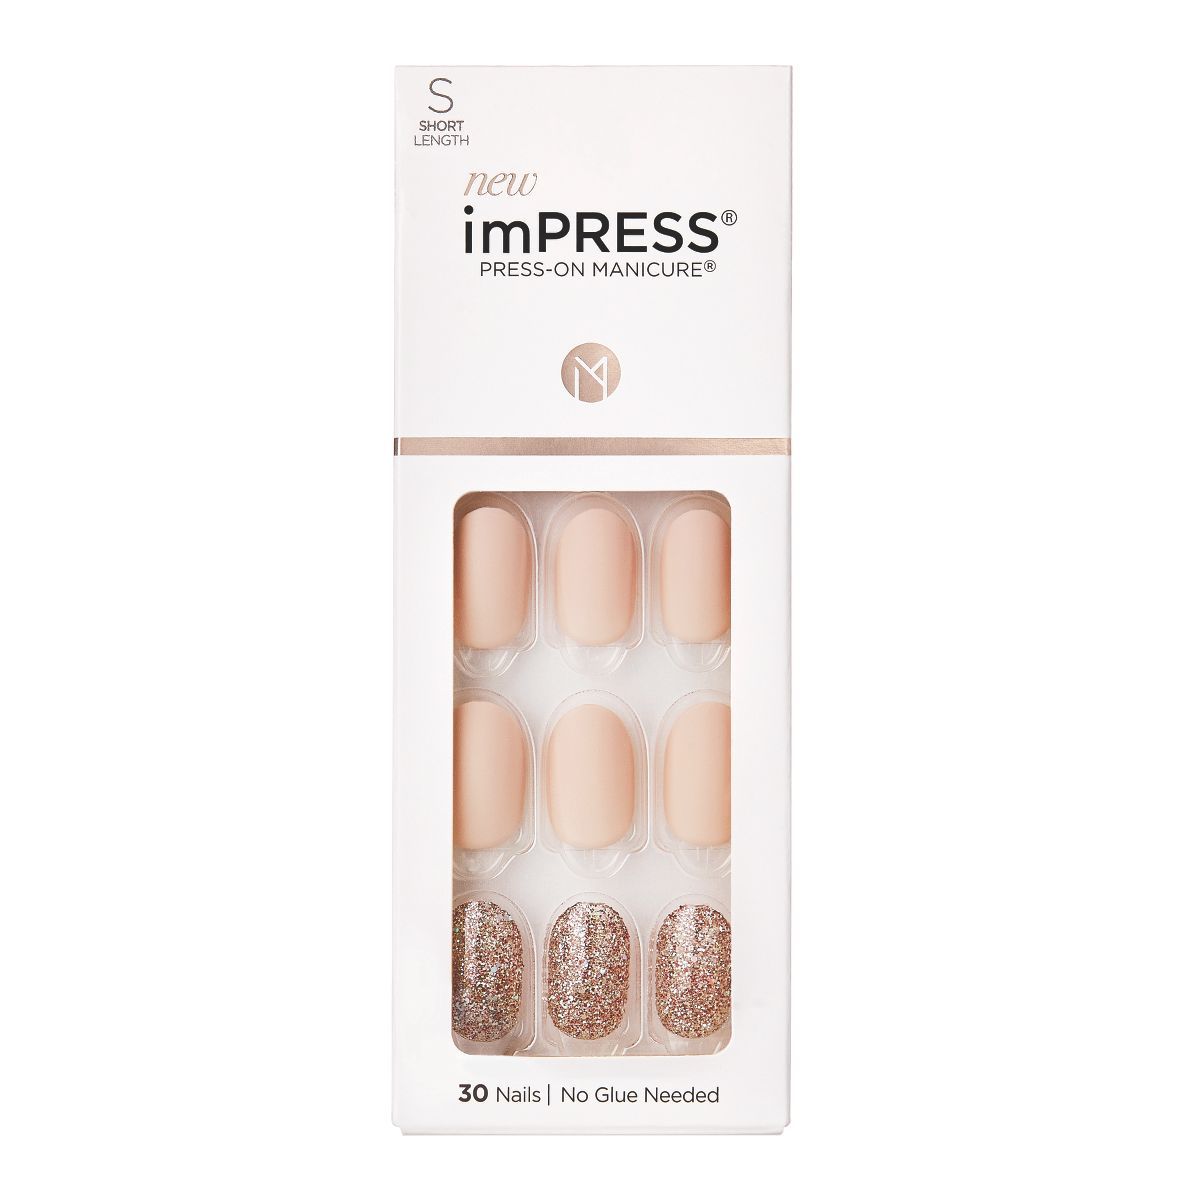 imPRESS Press-On Manicure Press-On Nails - Evanesce - 30ct | Target